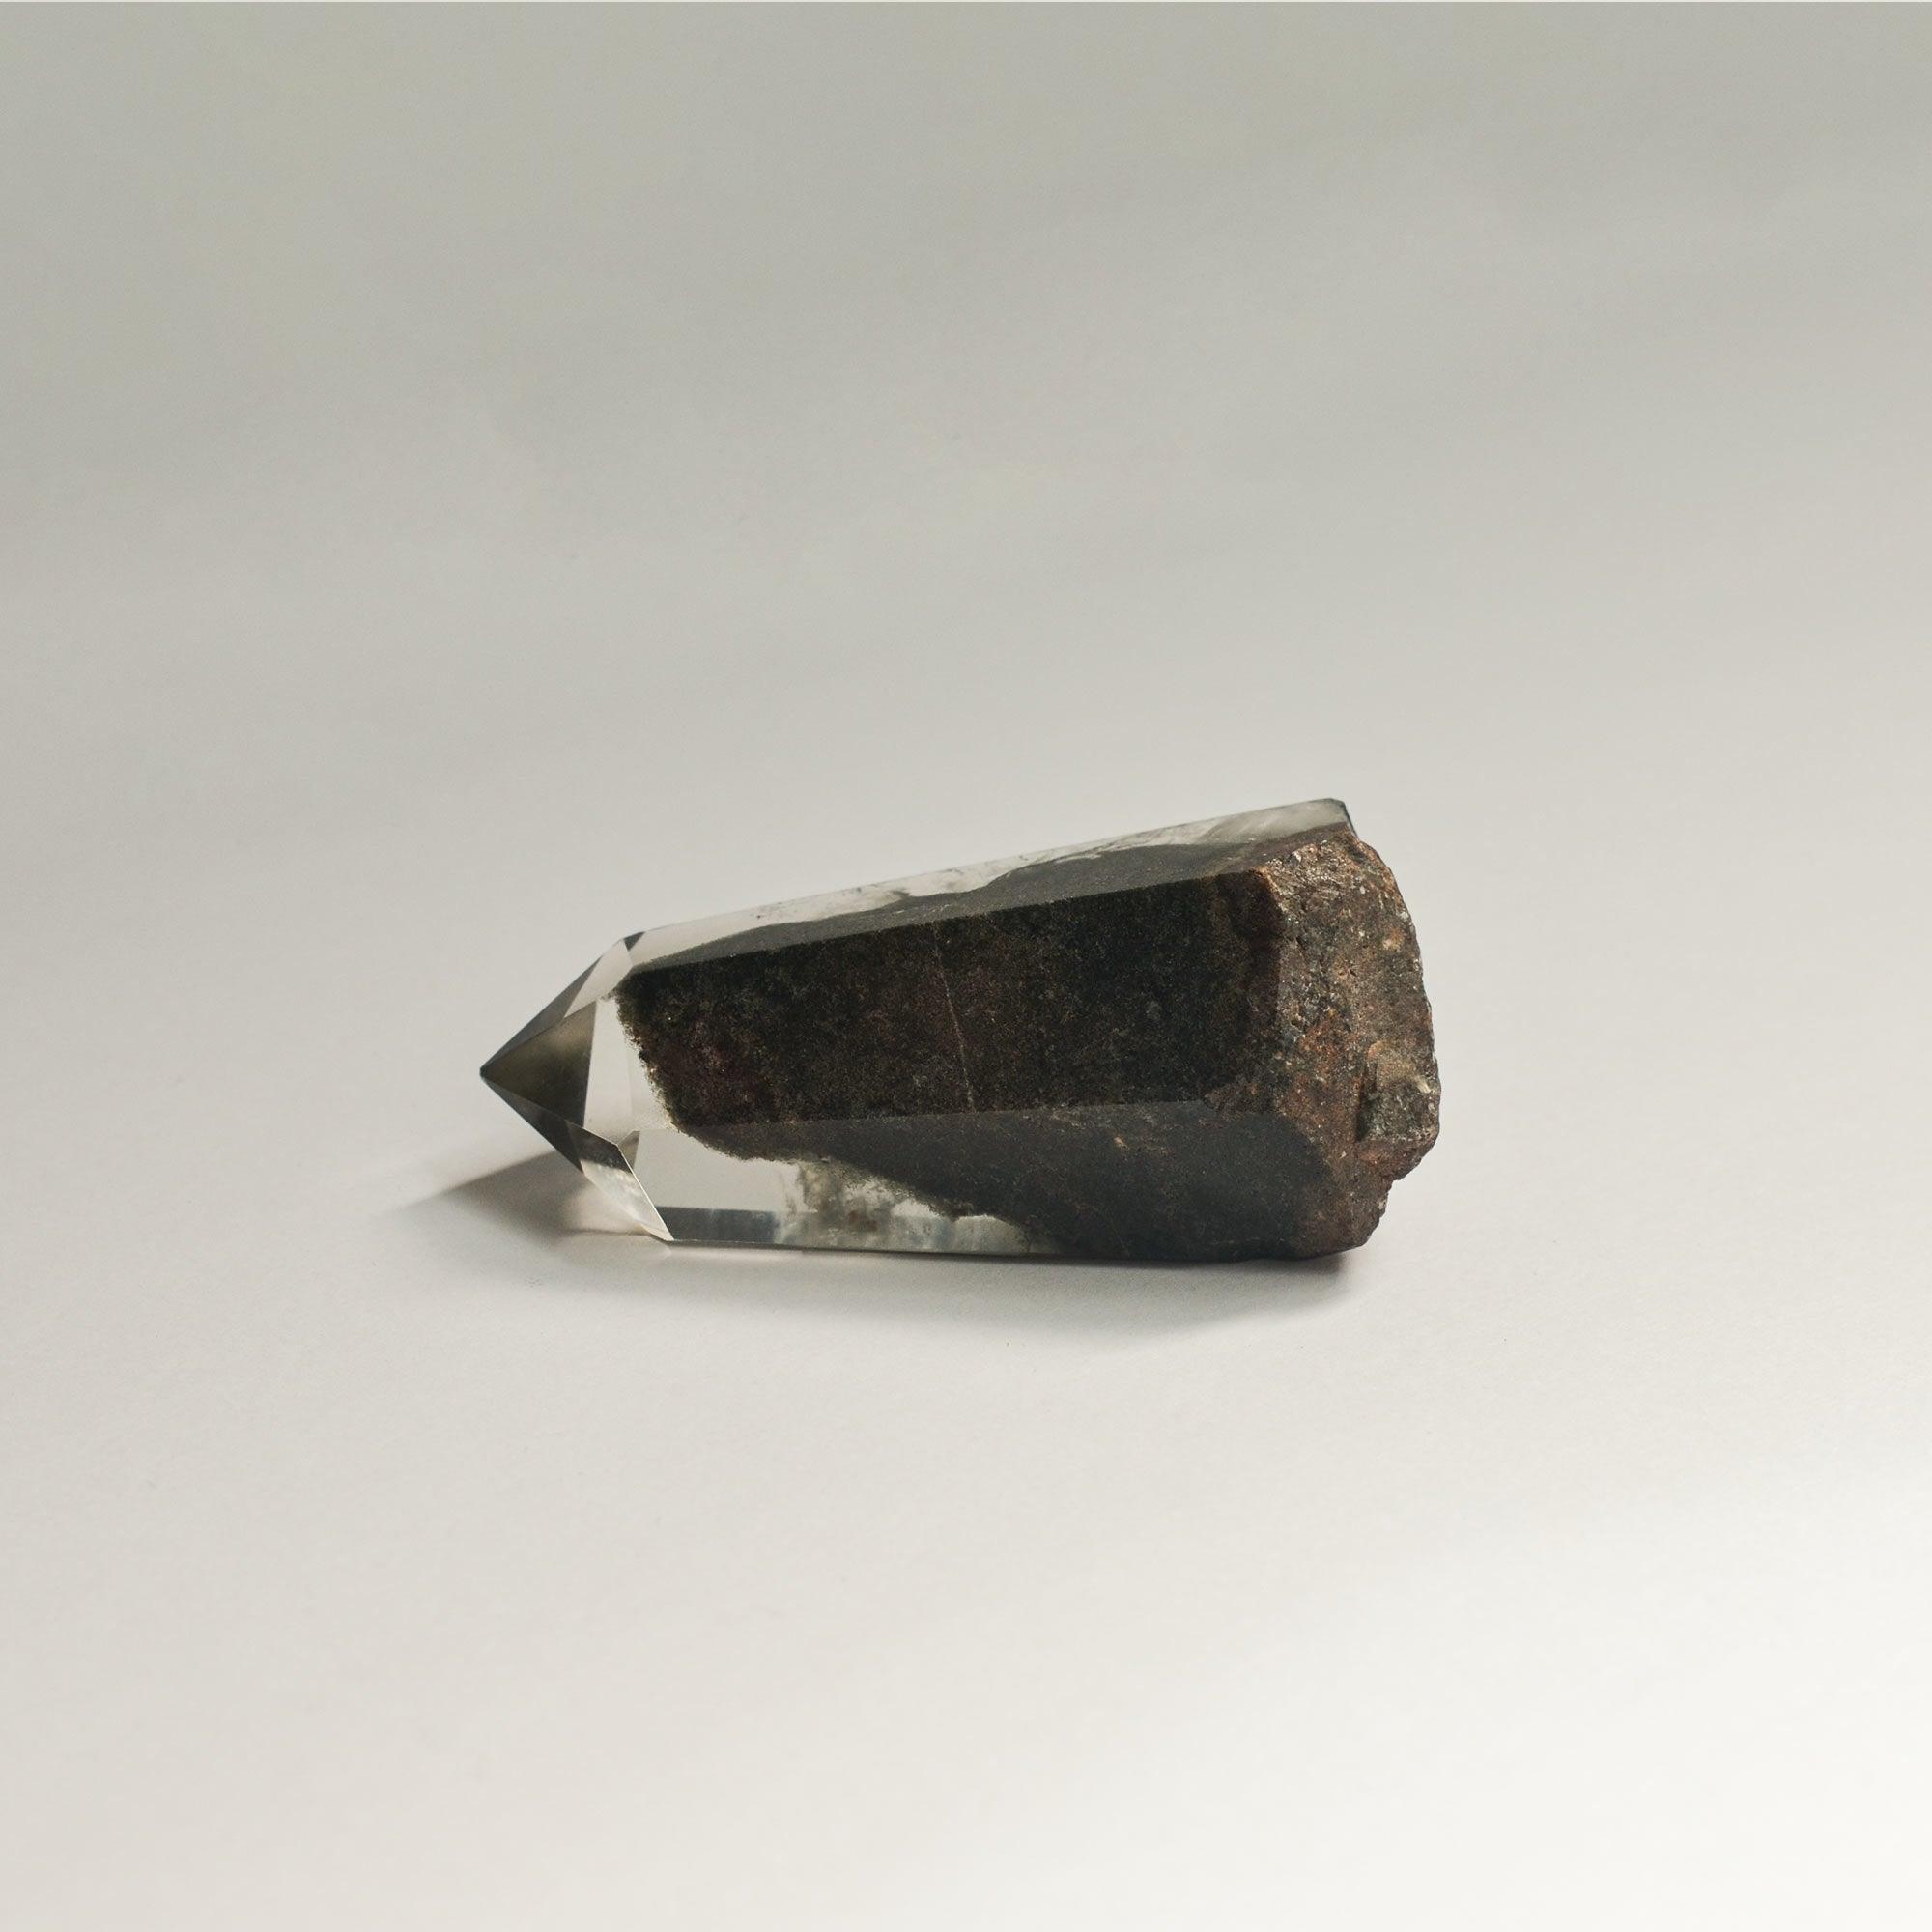 left view of phantom quartz in hematitie